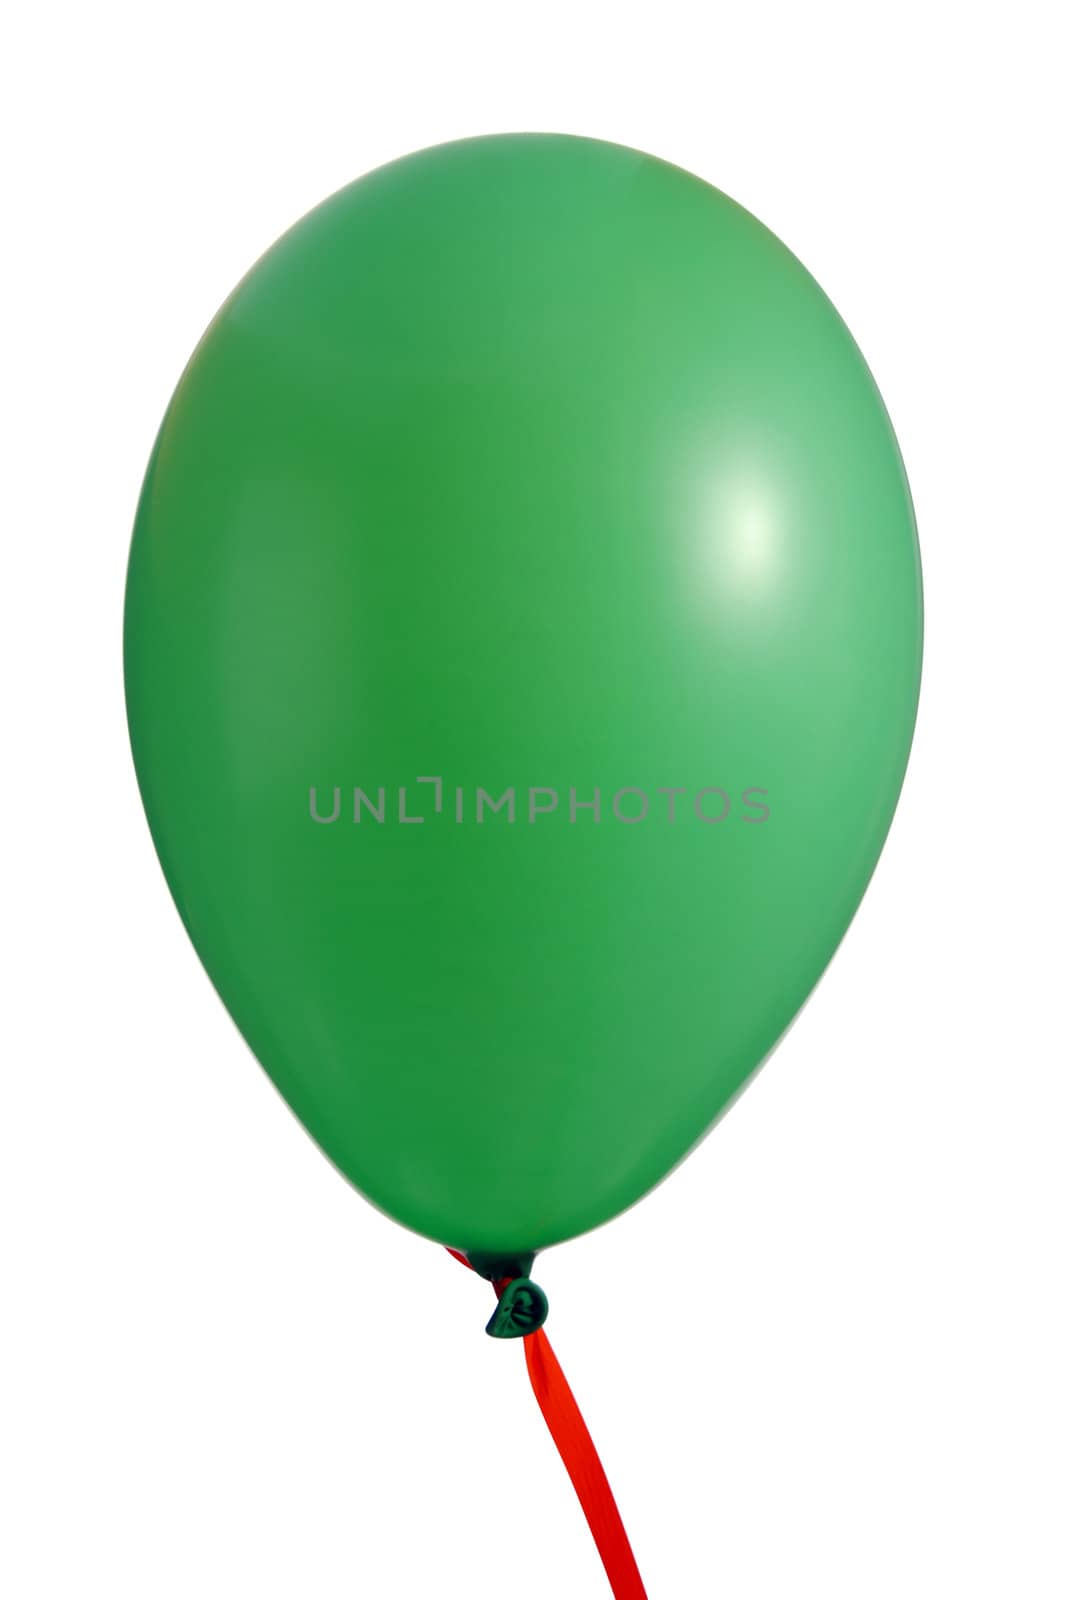 Green balloon by Gjermund